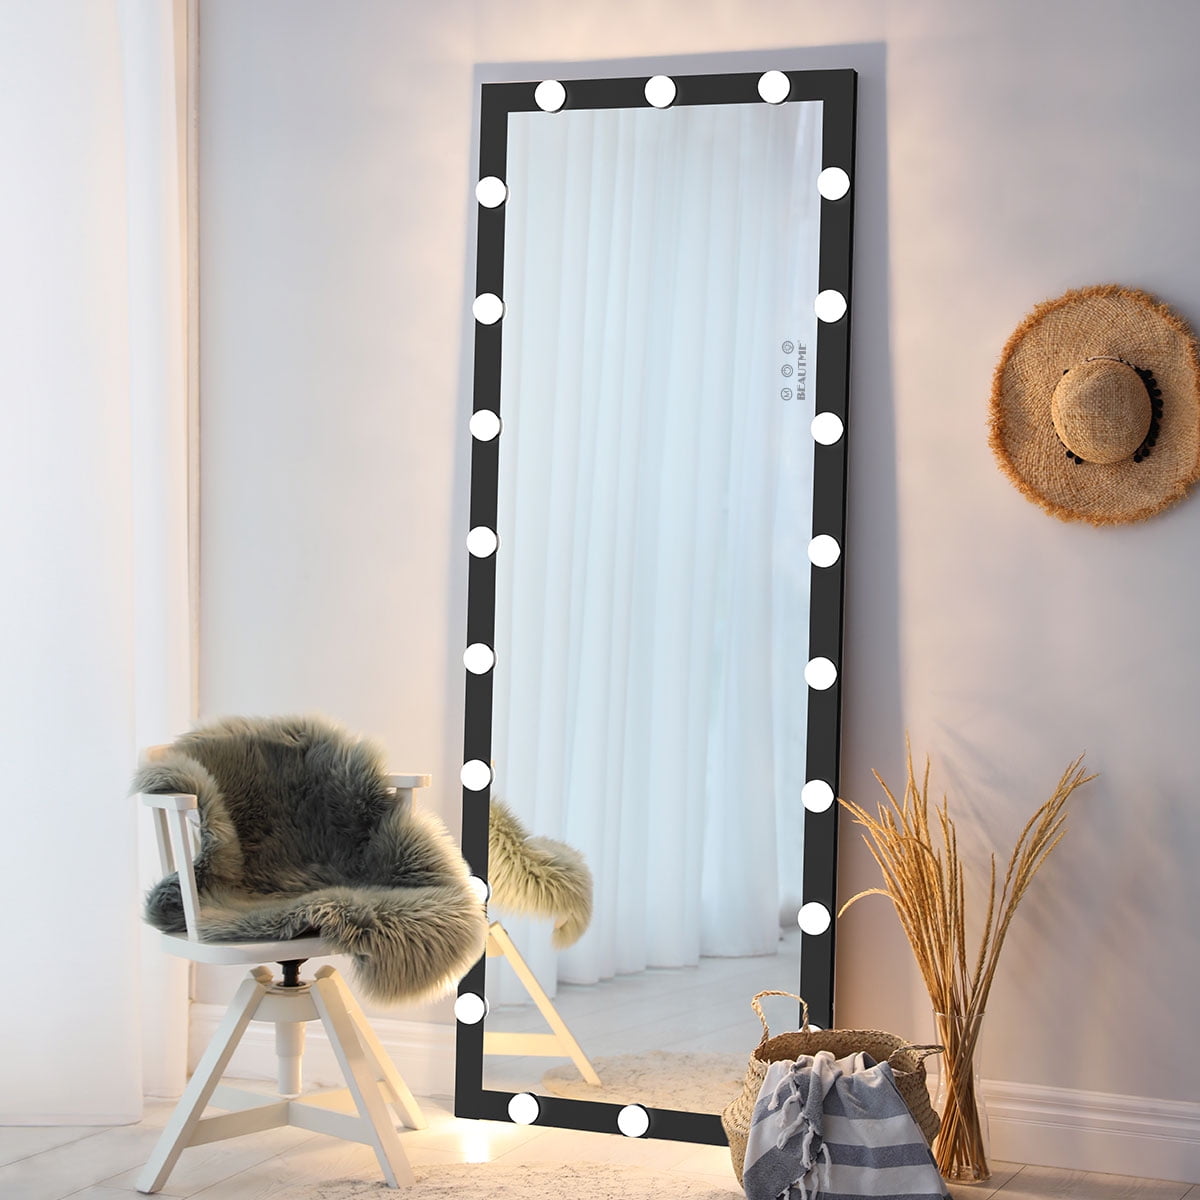 ANYHI Oversized Floor Mirror Long Mirror Full Length Mirror with